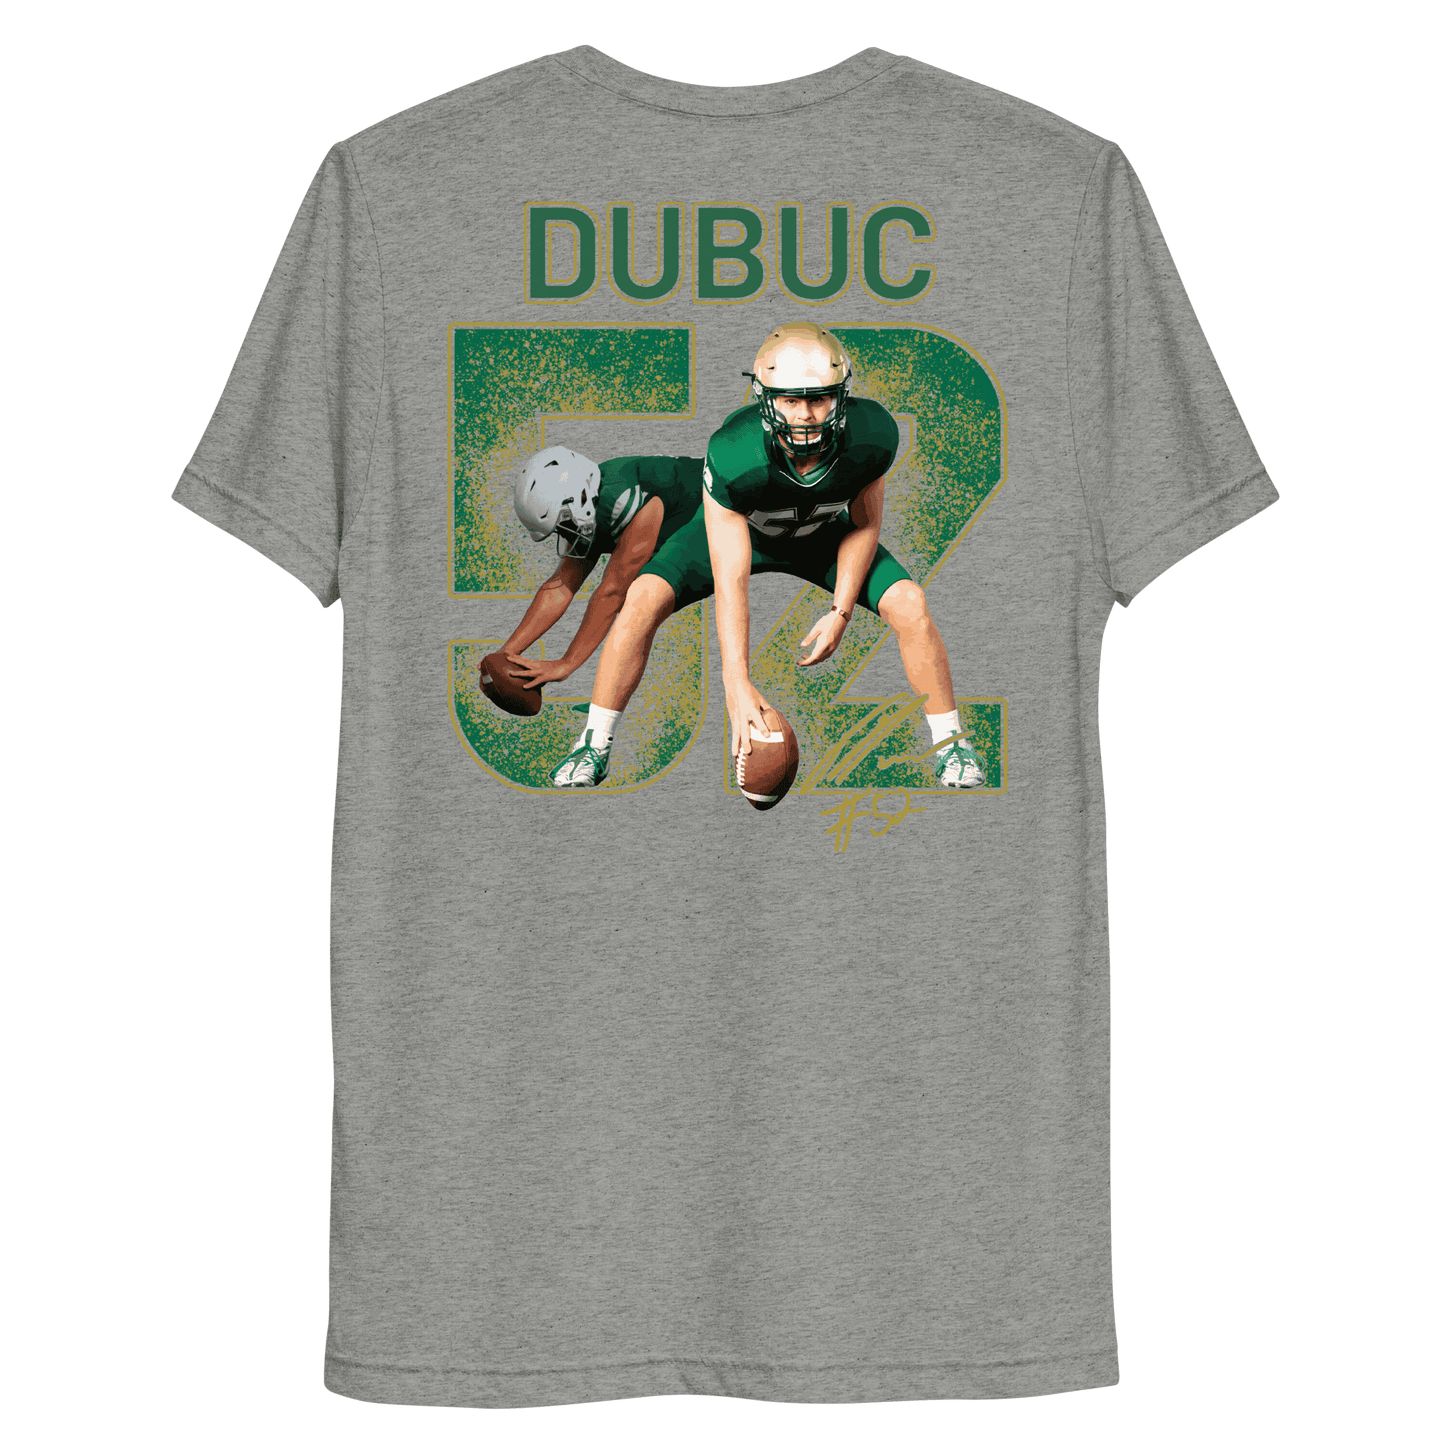 Trey DuBuc | Mural & Patch Performance Shirt - Clutch -